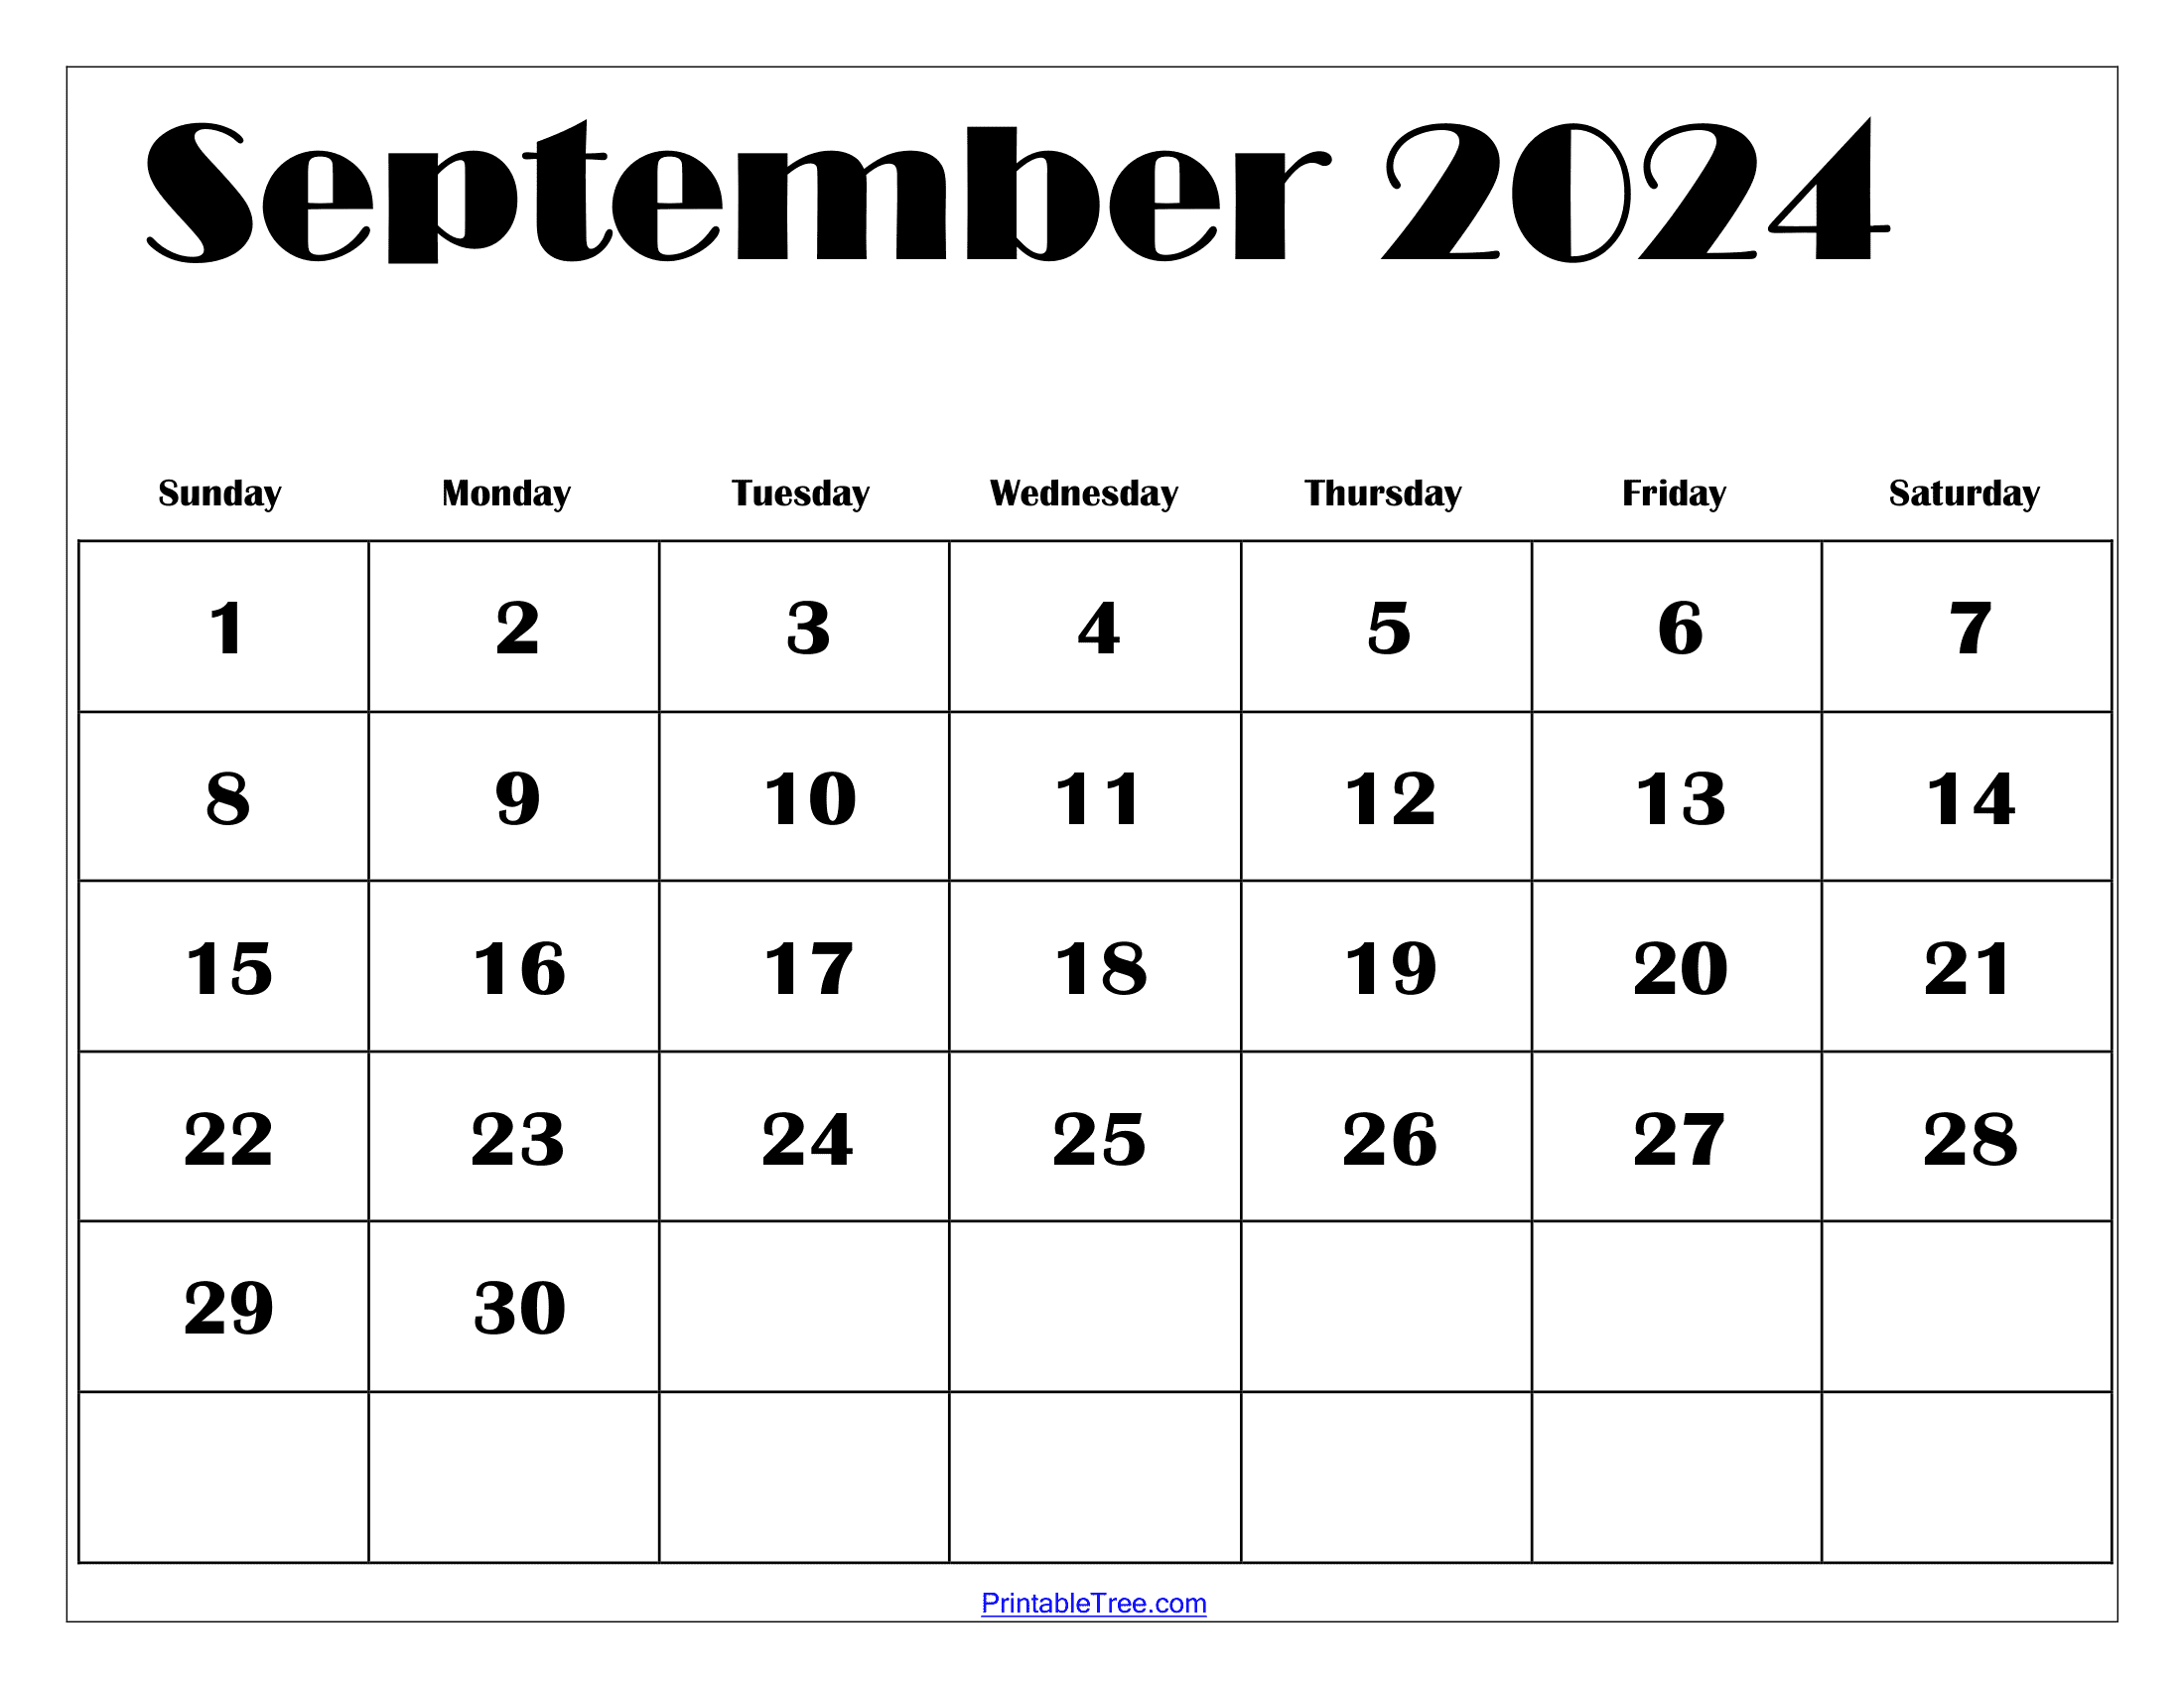 September 2024 Calendar Printable Pdf With Holidays for Blank Calendar September 2024 Printable